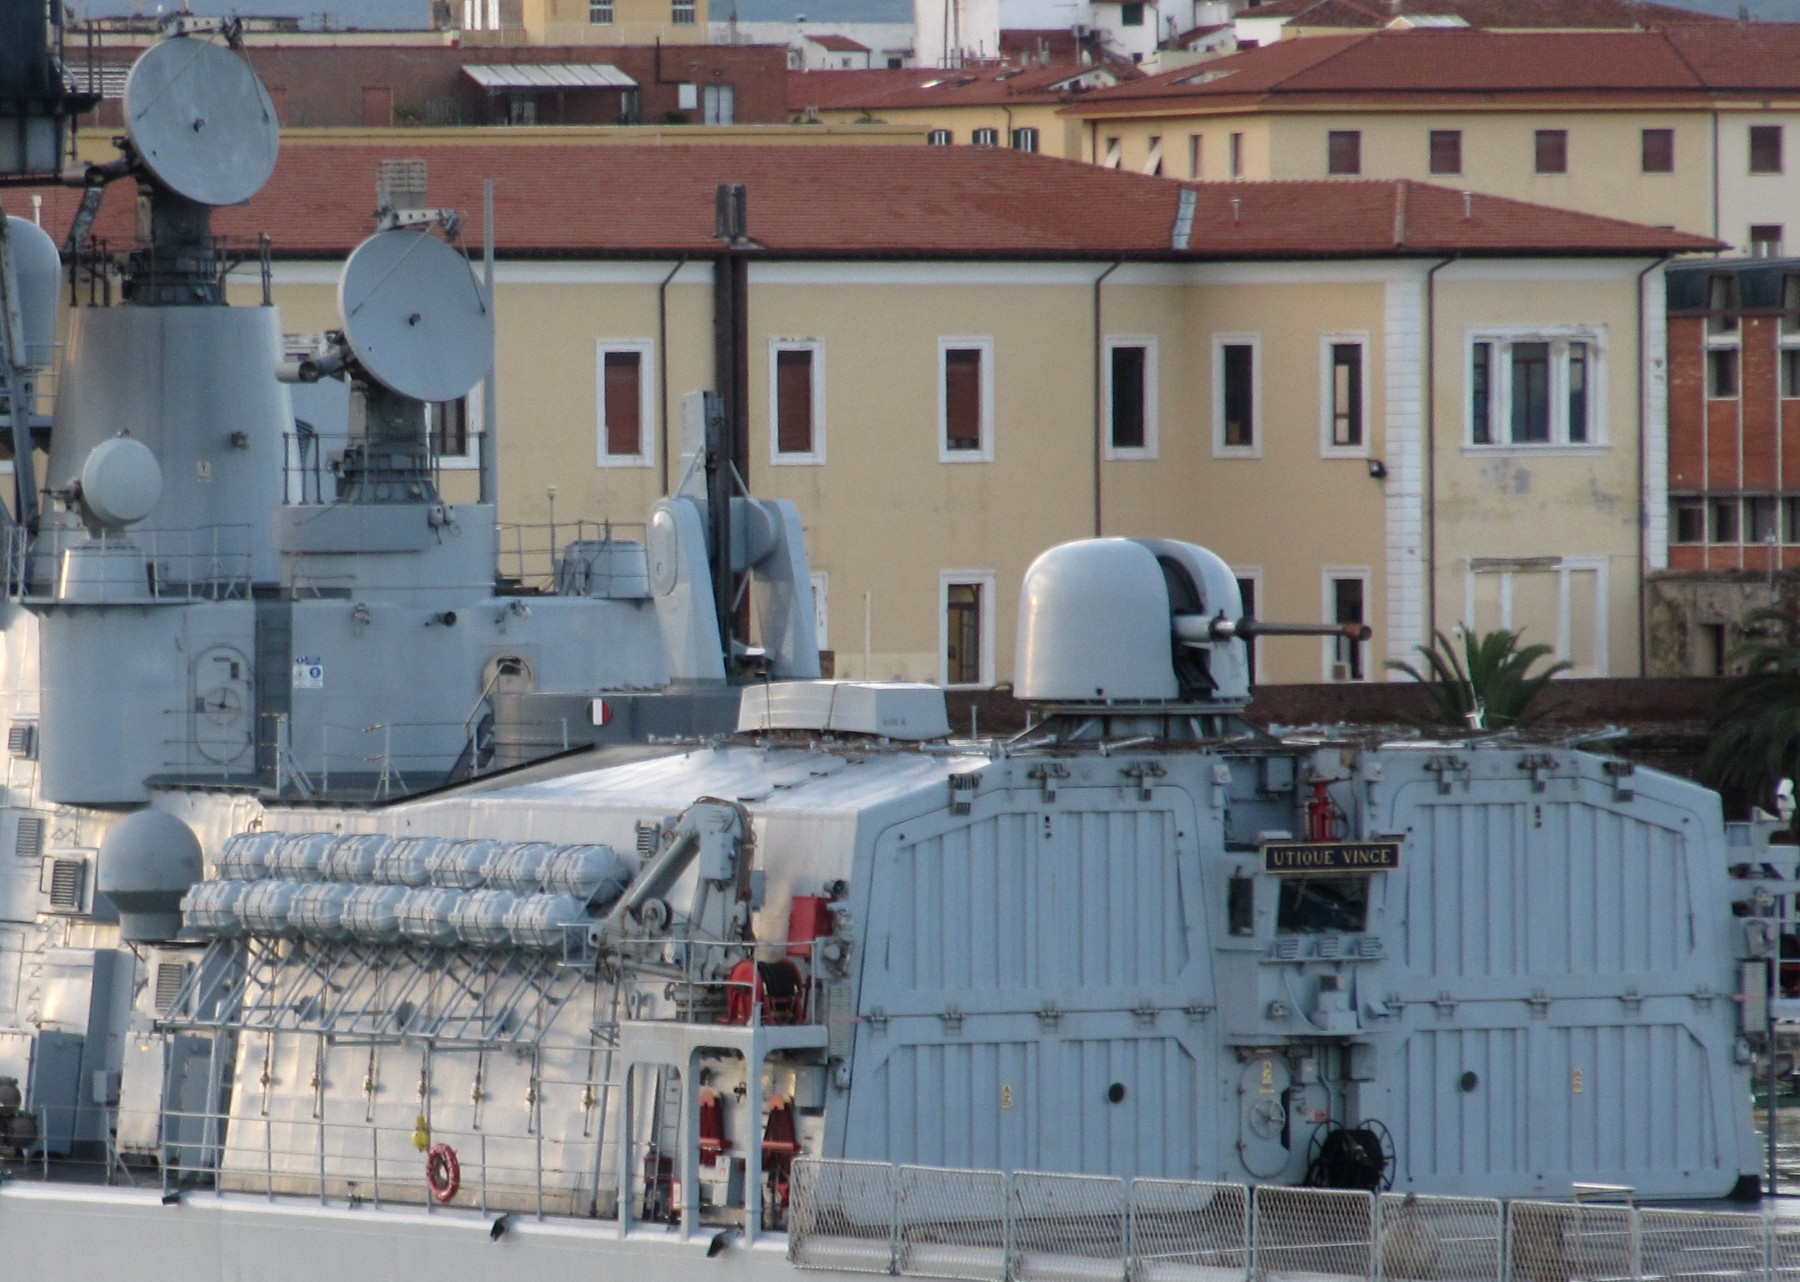 d-560 luigi durand de la penne its nave guided missile destroyer ddg italian navy marina militare 66a